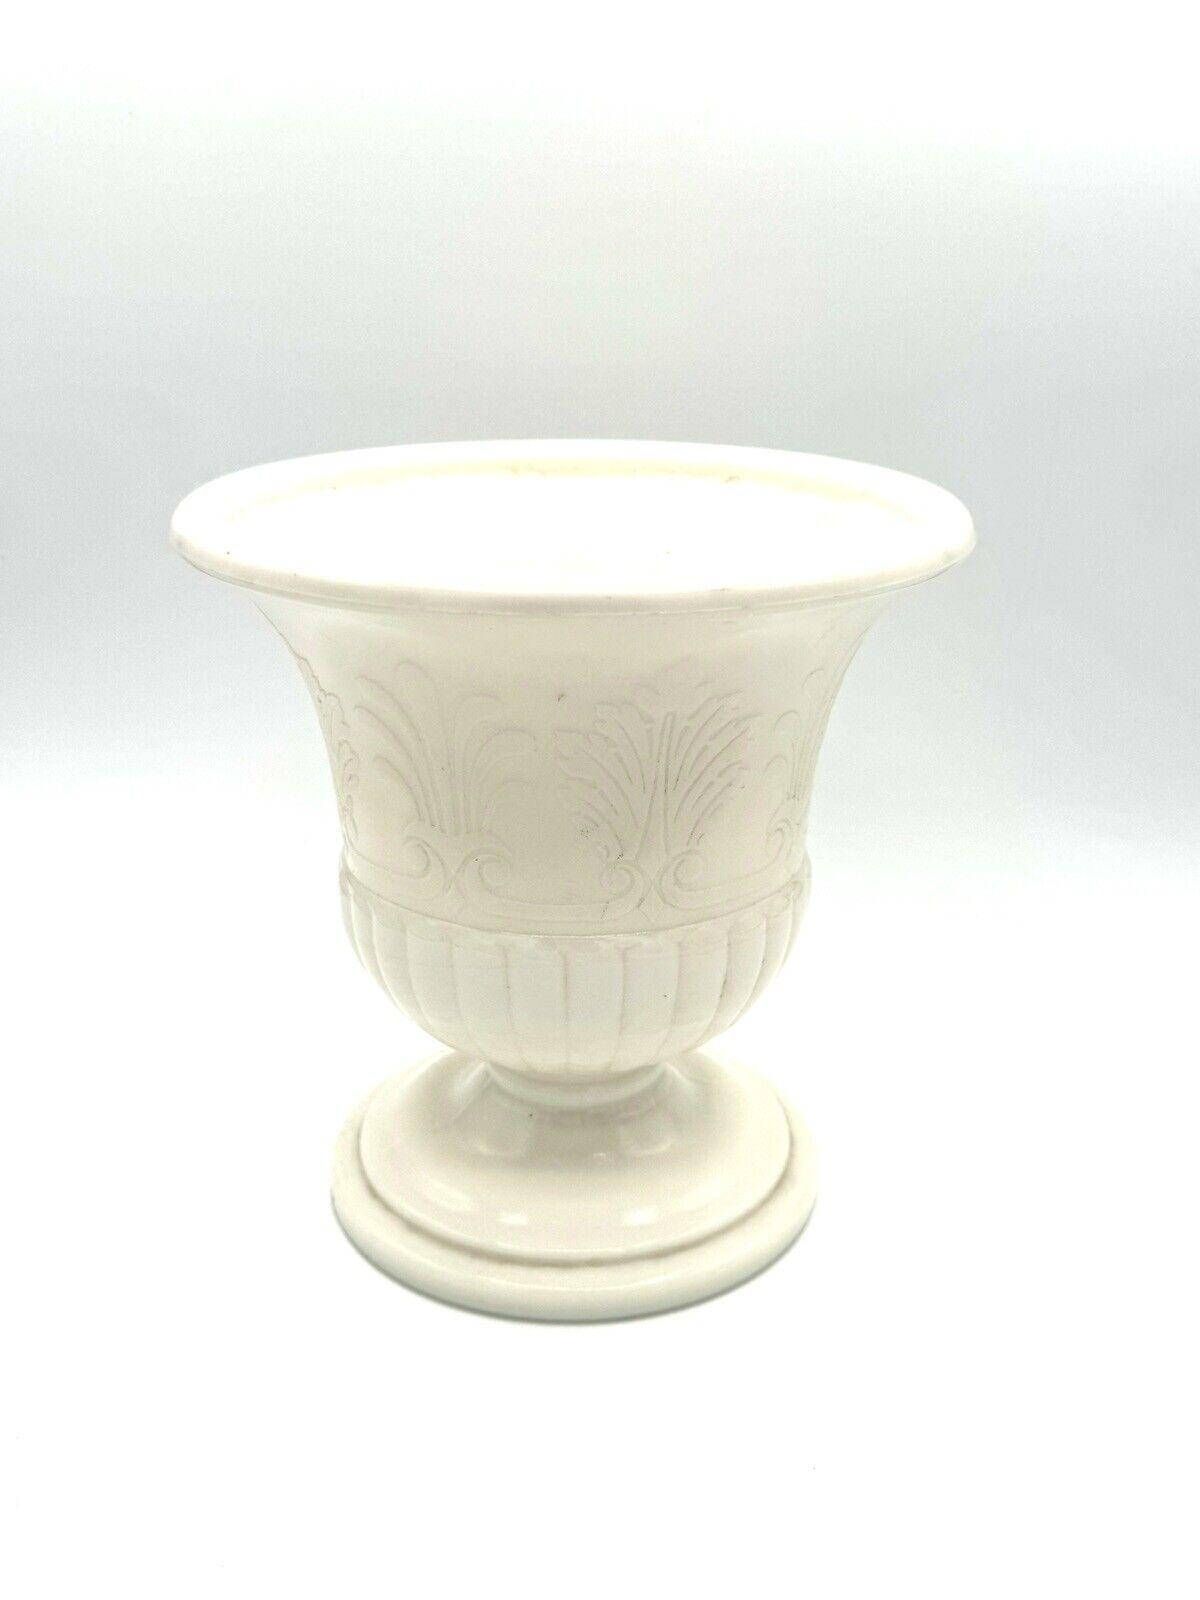 Vintage Monax white raised Fan design Urn /vase gorgeous shape and design work